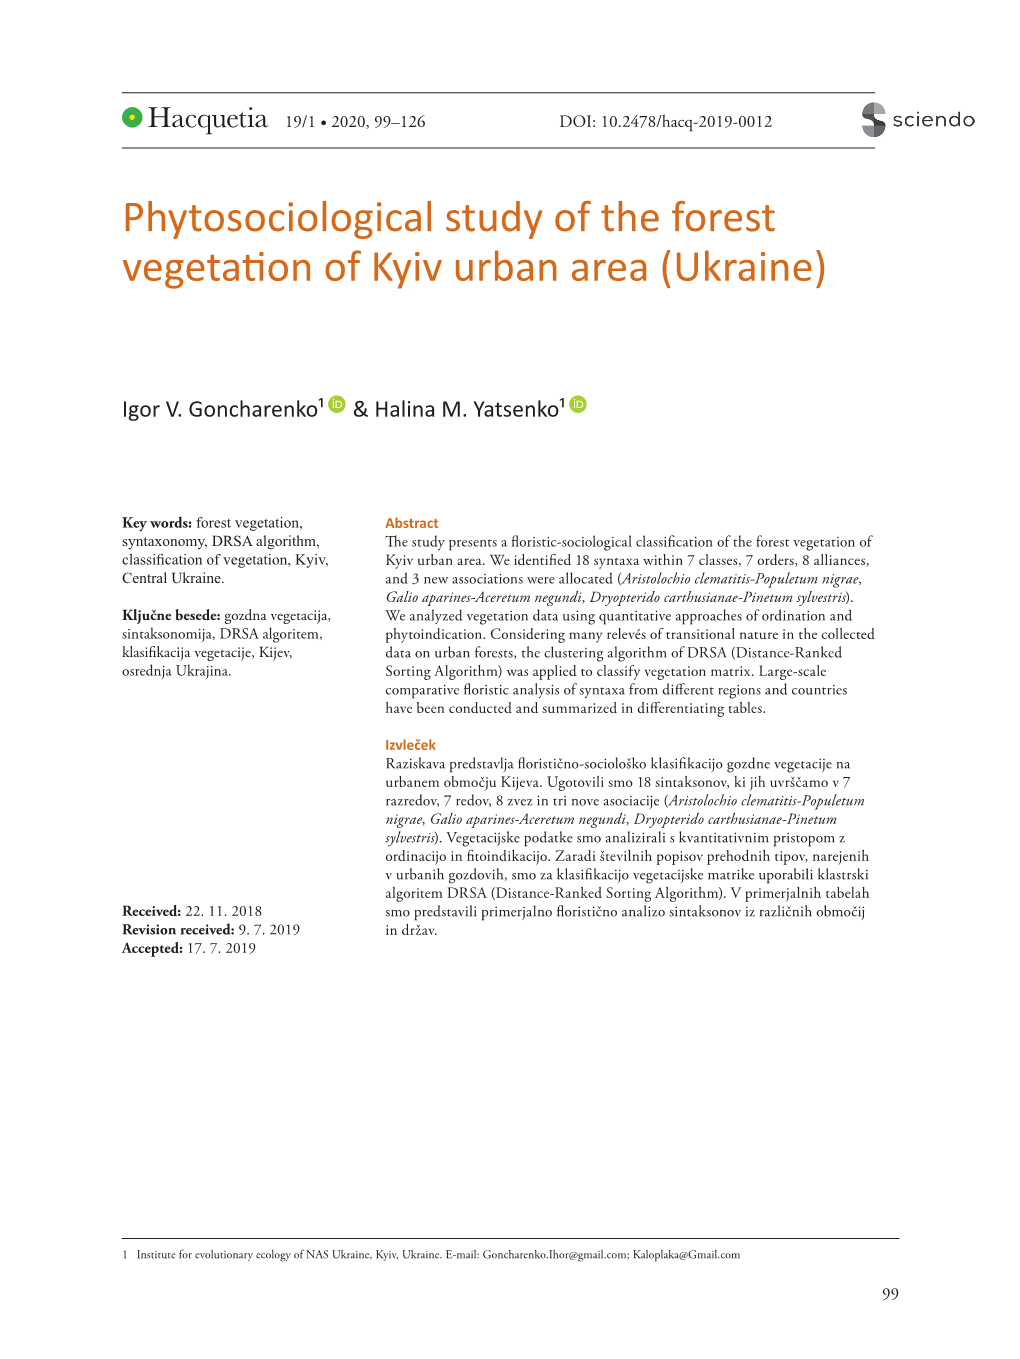 Phytosociological Study of the Forest Vegetation of Kyiv Urban Area (Ukraine)